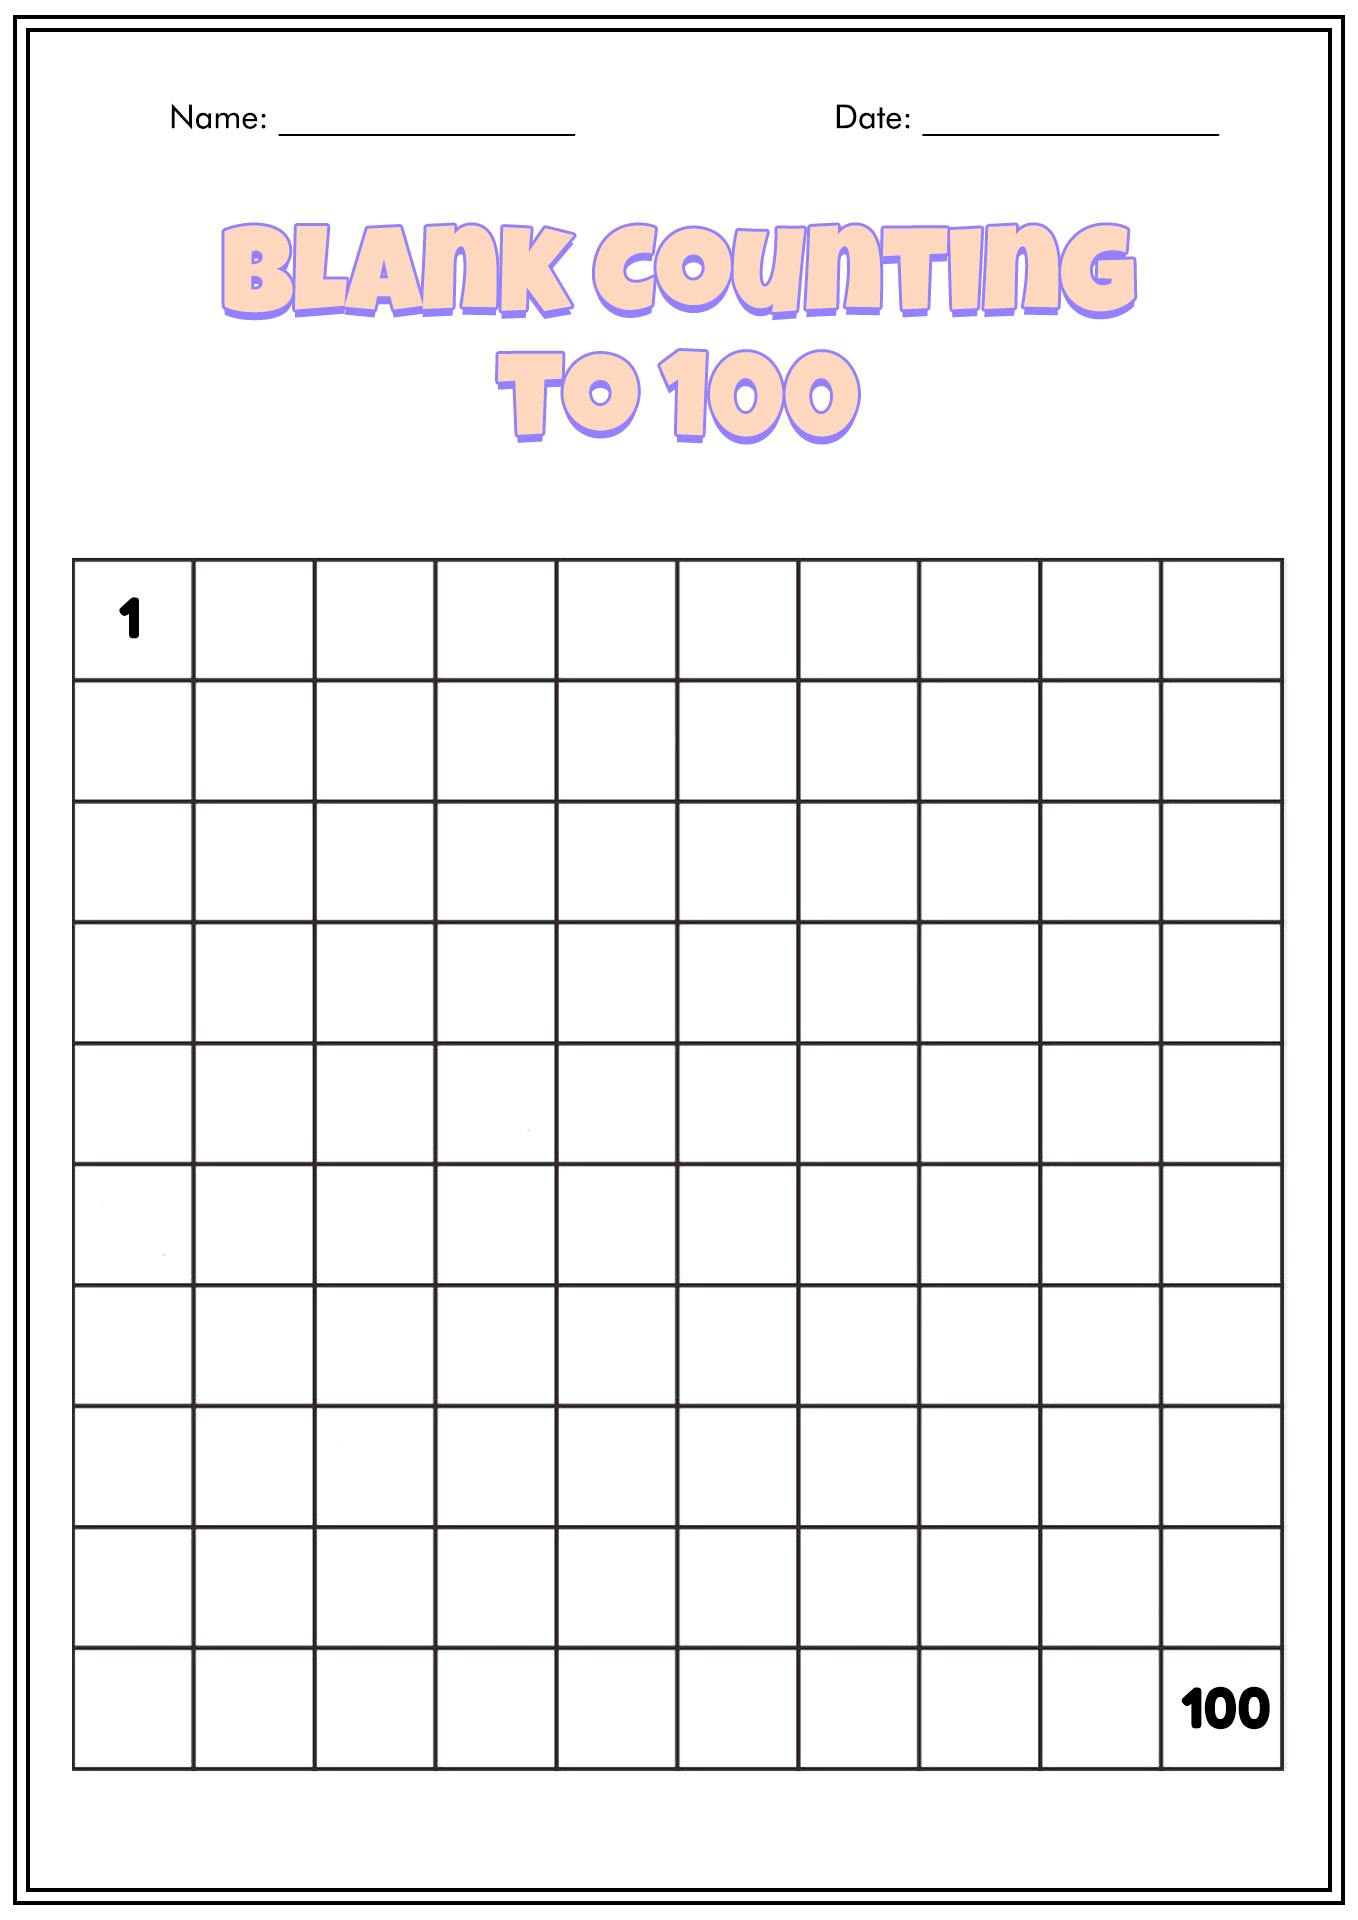 Writing Numbers To 100 Worksheet